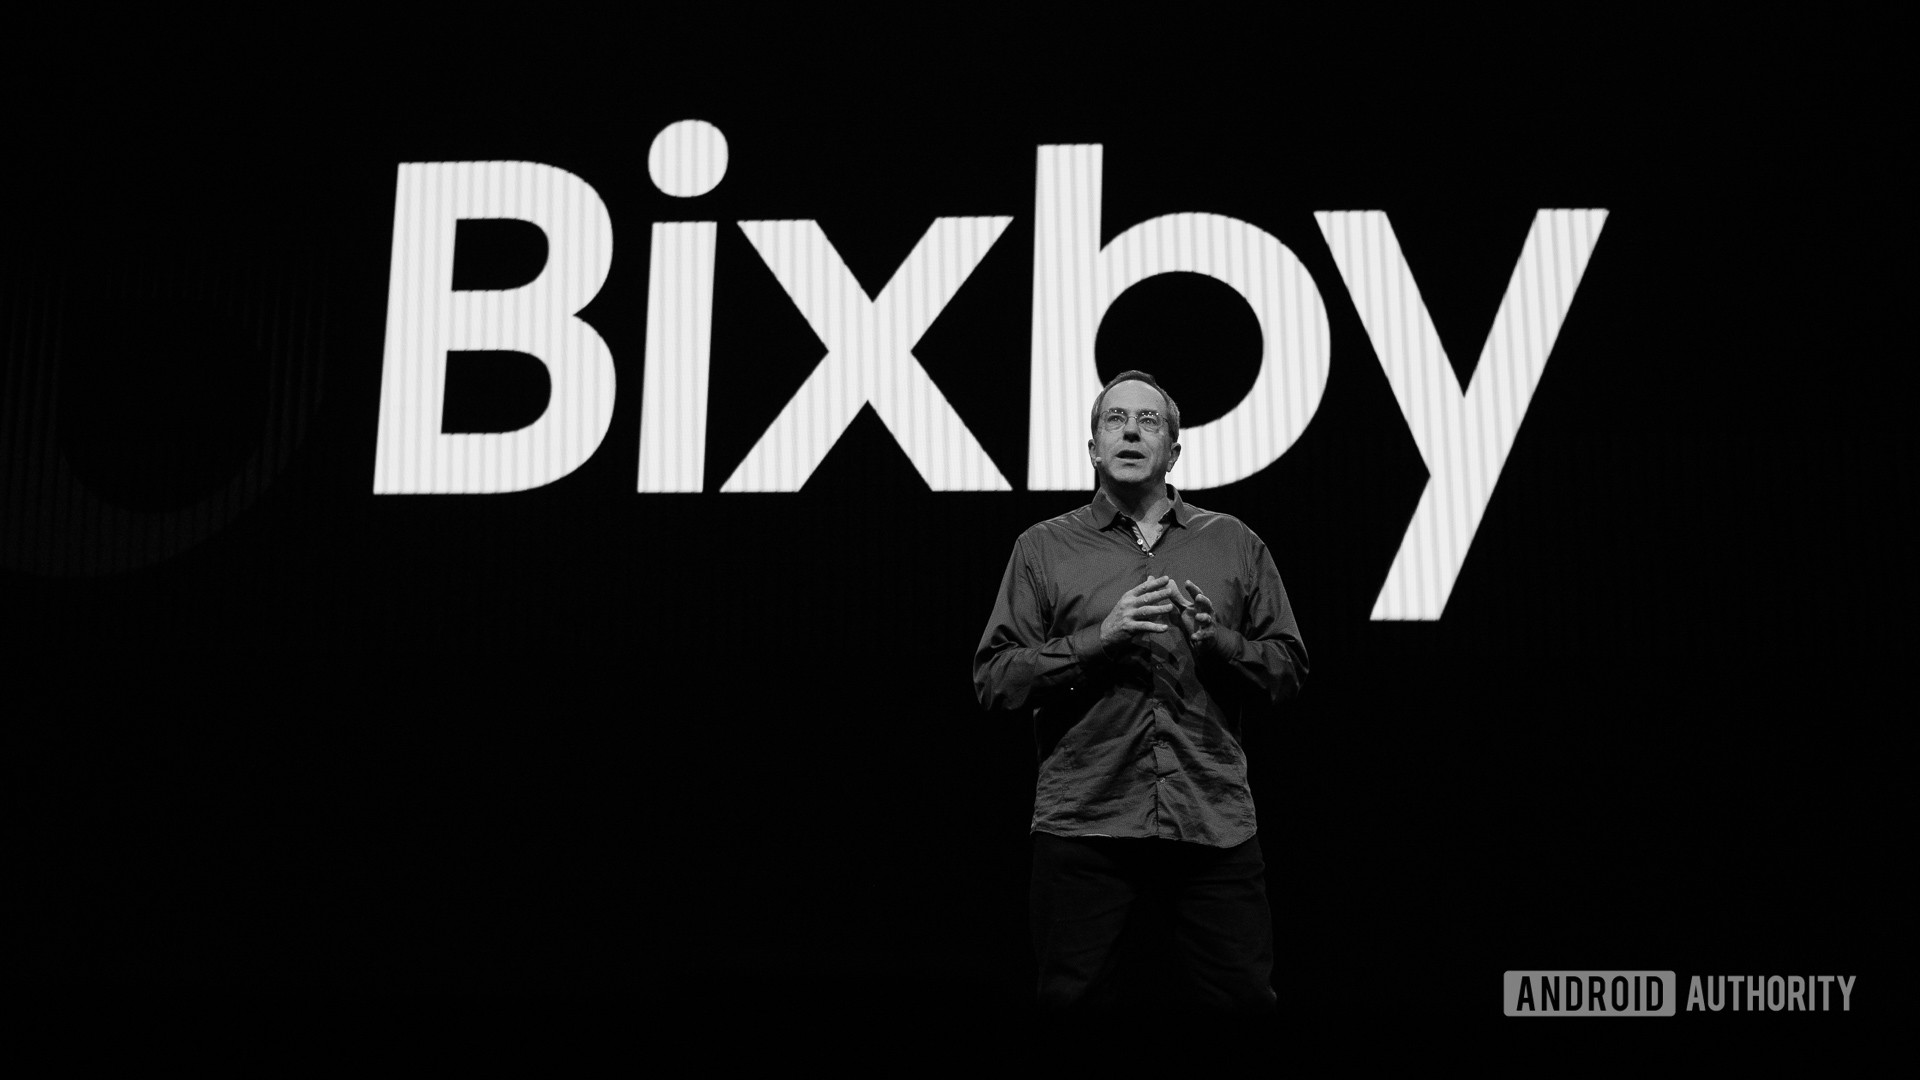 Bixby at Samsung Developer Conference 2019